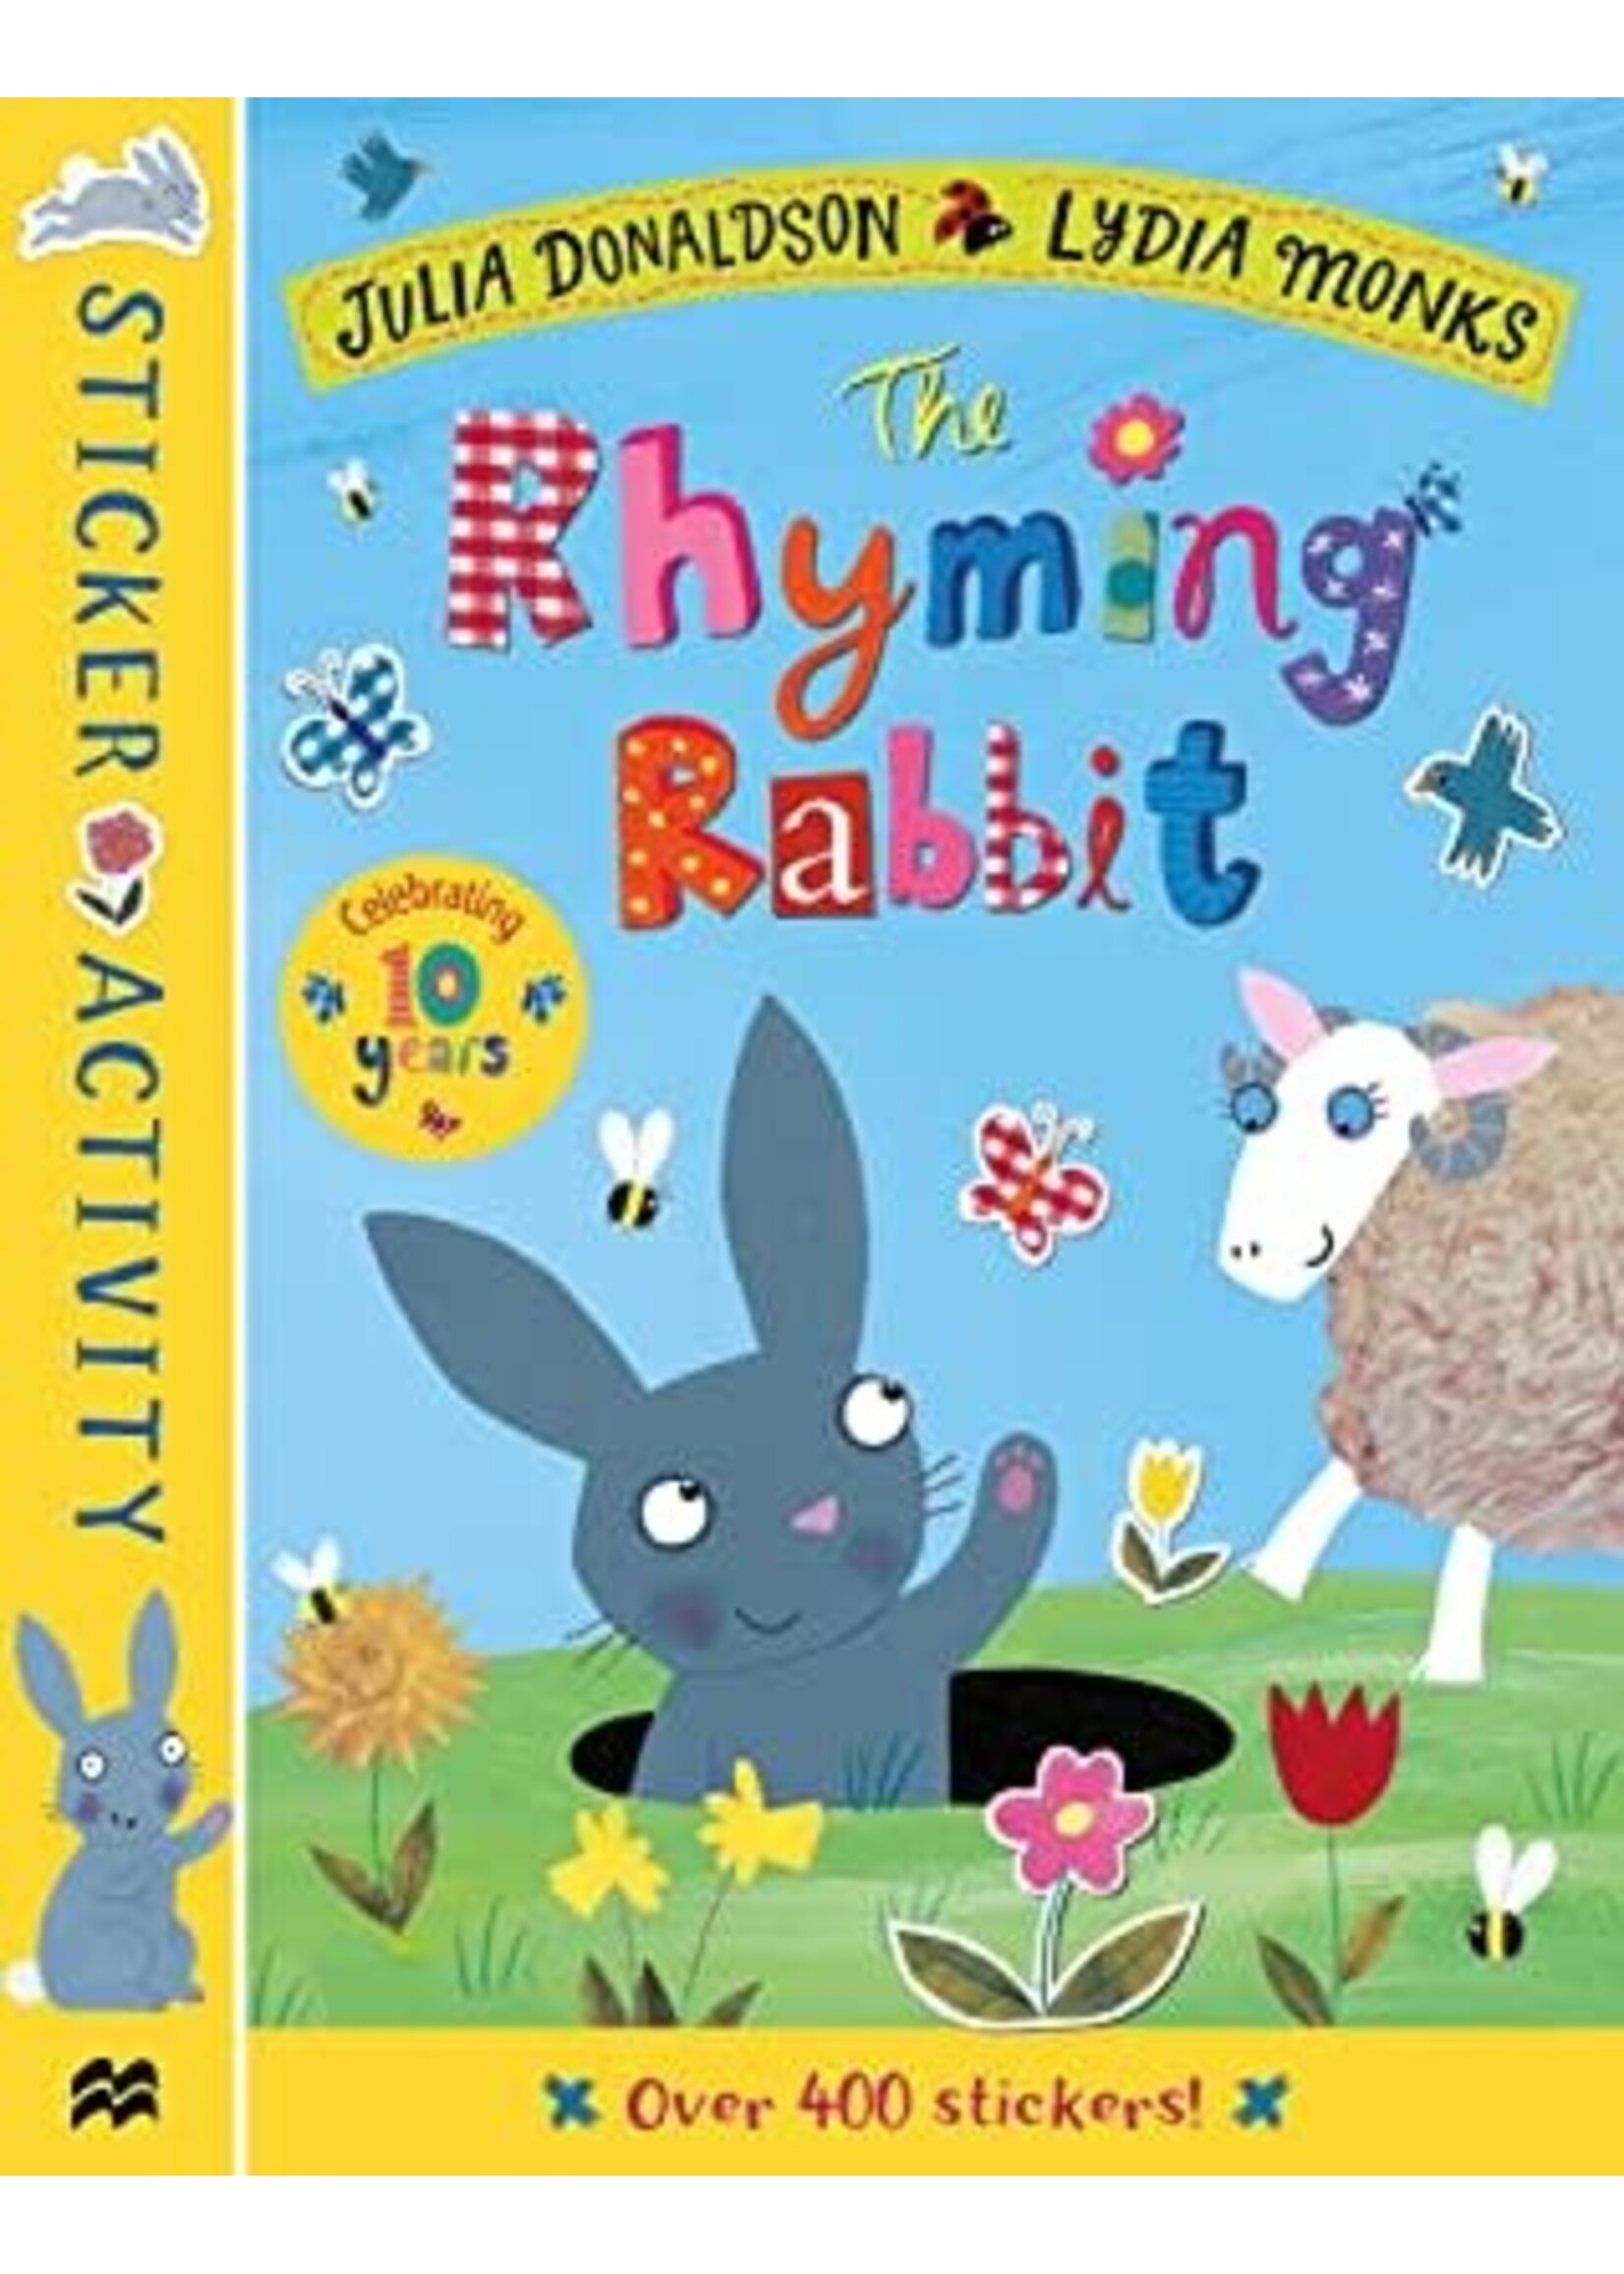 The Rhyming Rabbit Sticker Book (Activity Books) by Julia Donaldson